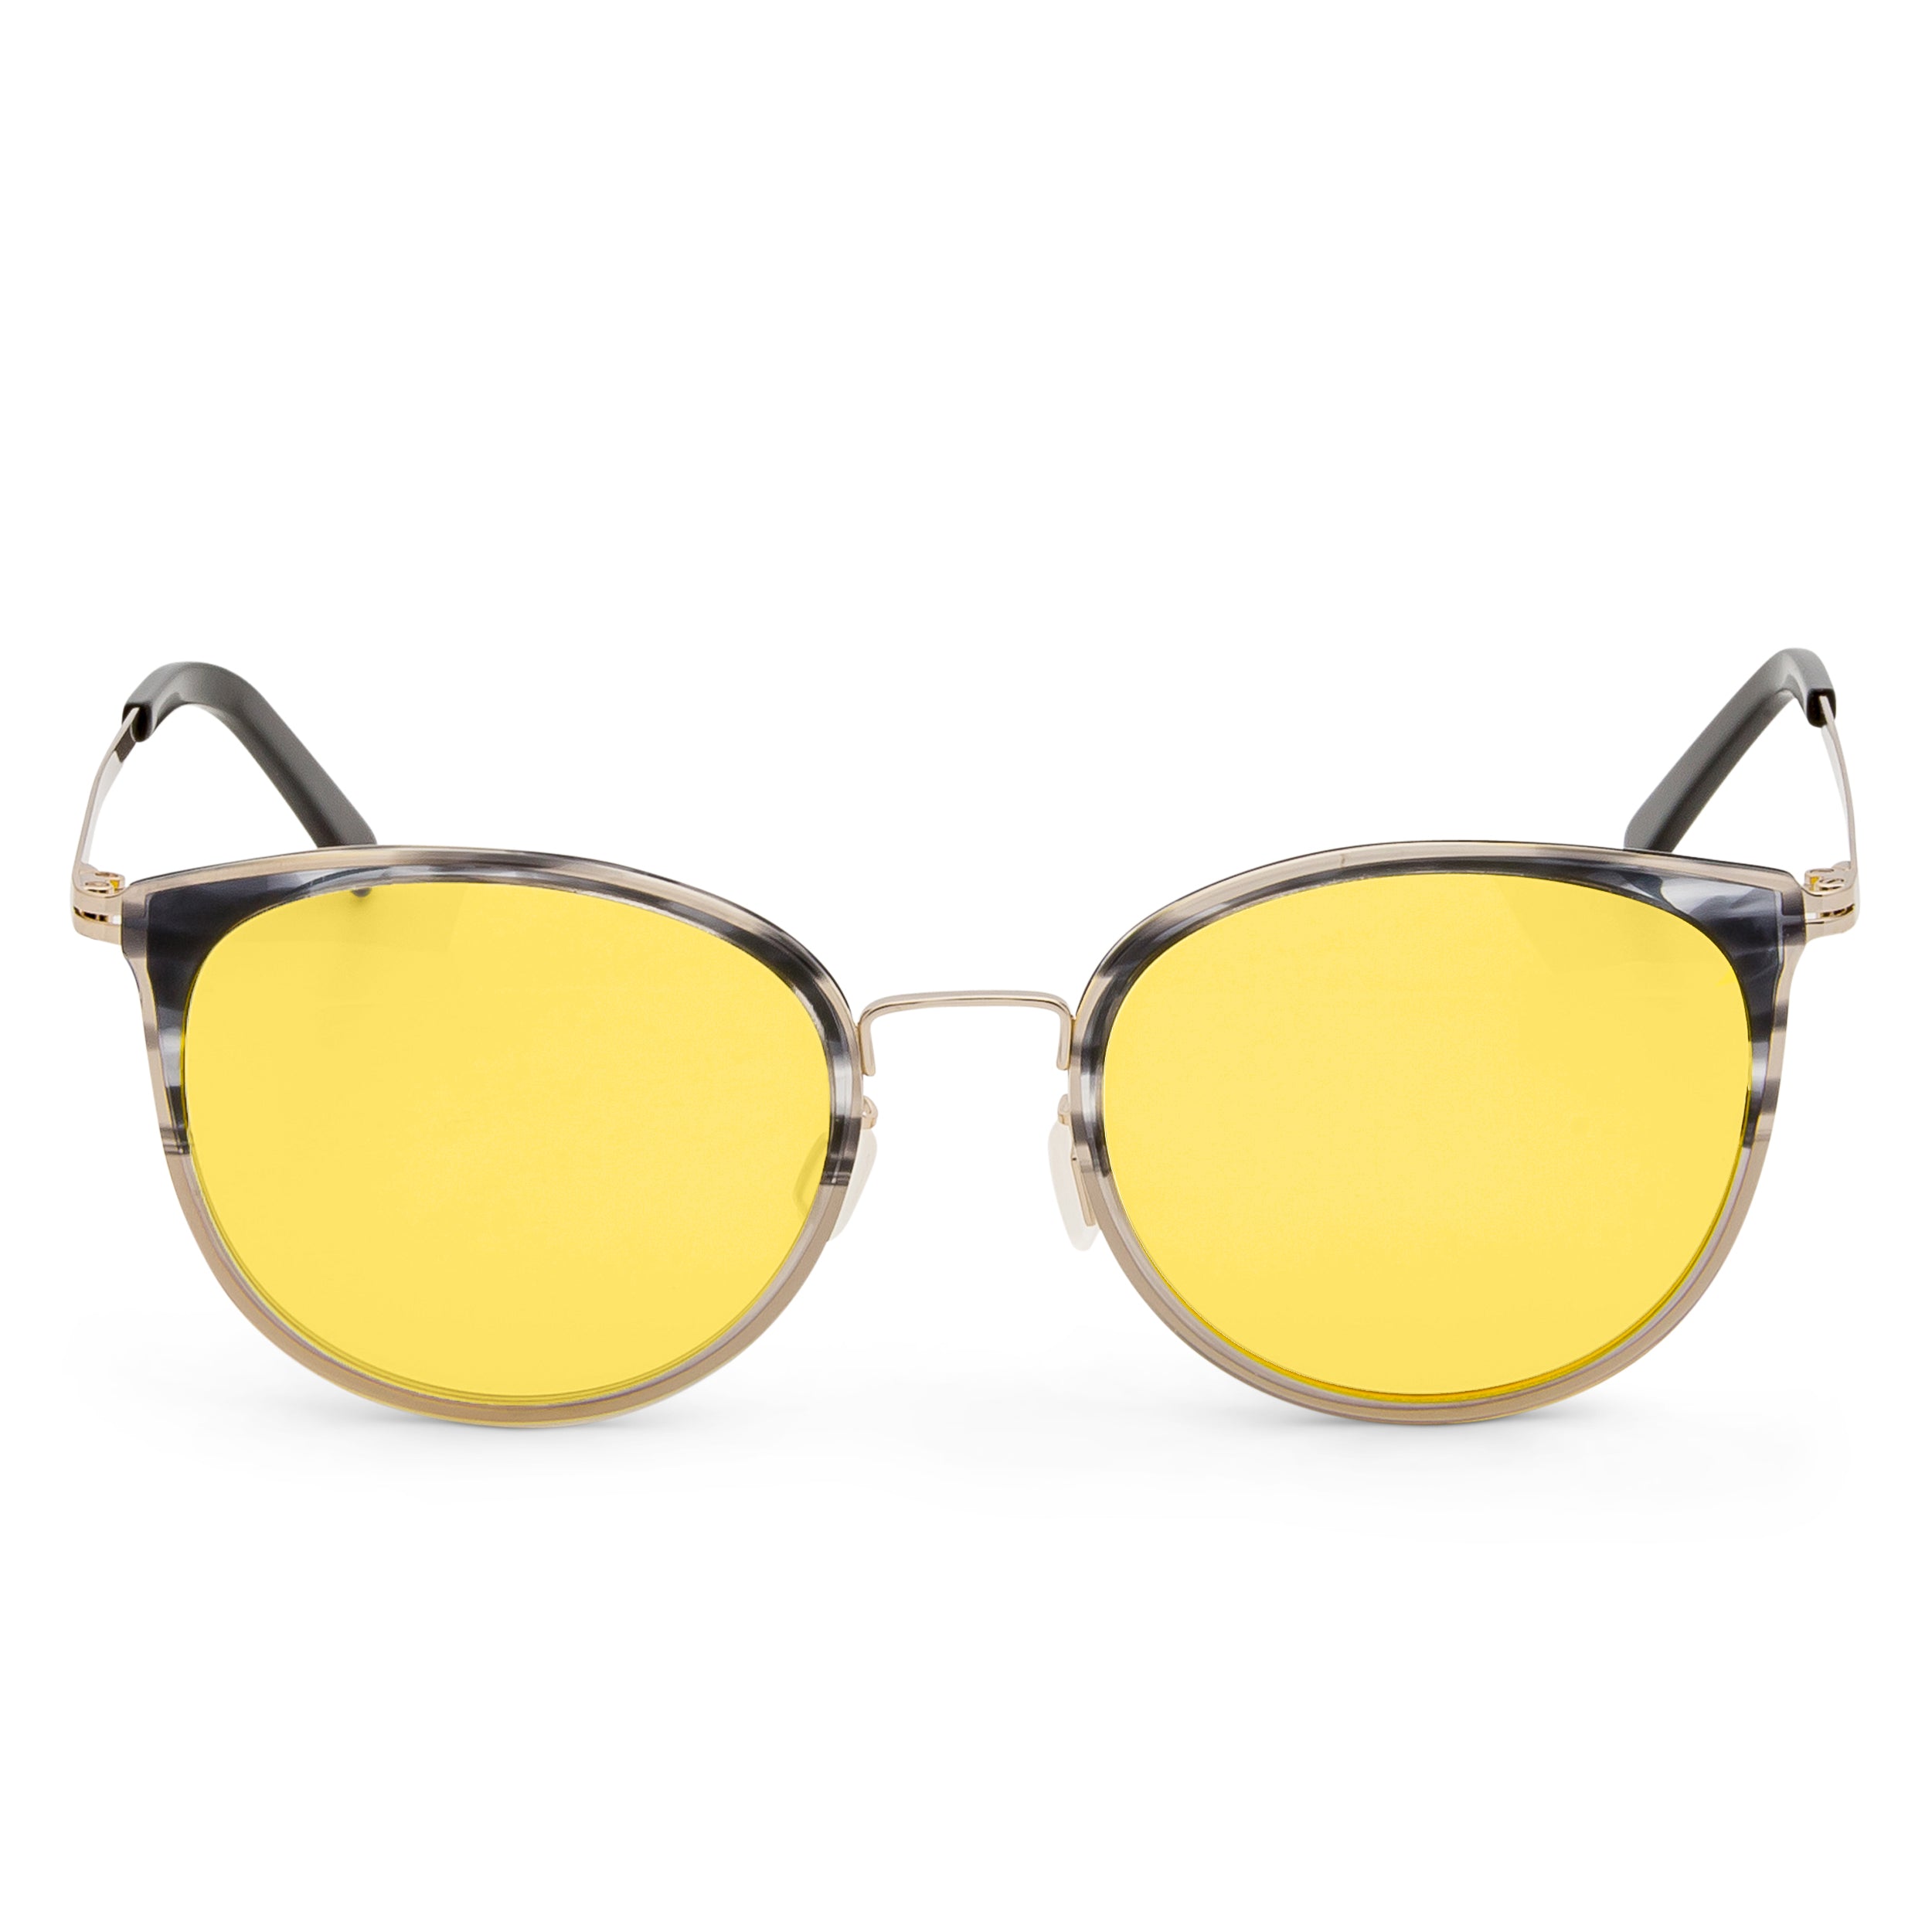 Truedark Daylight Malibu Sunglasses - Lifestyle Markets